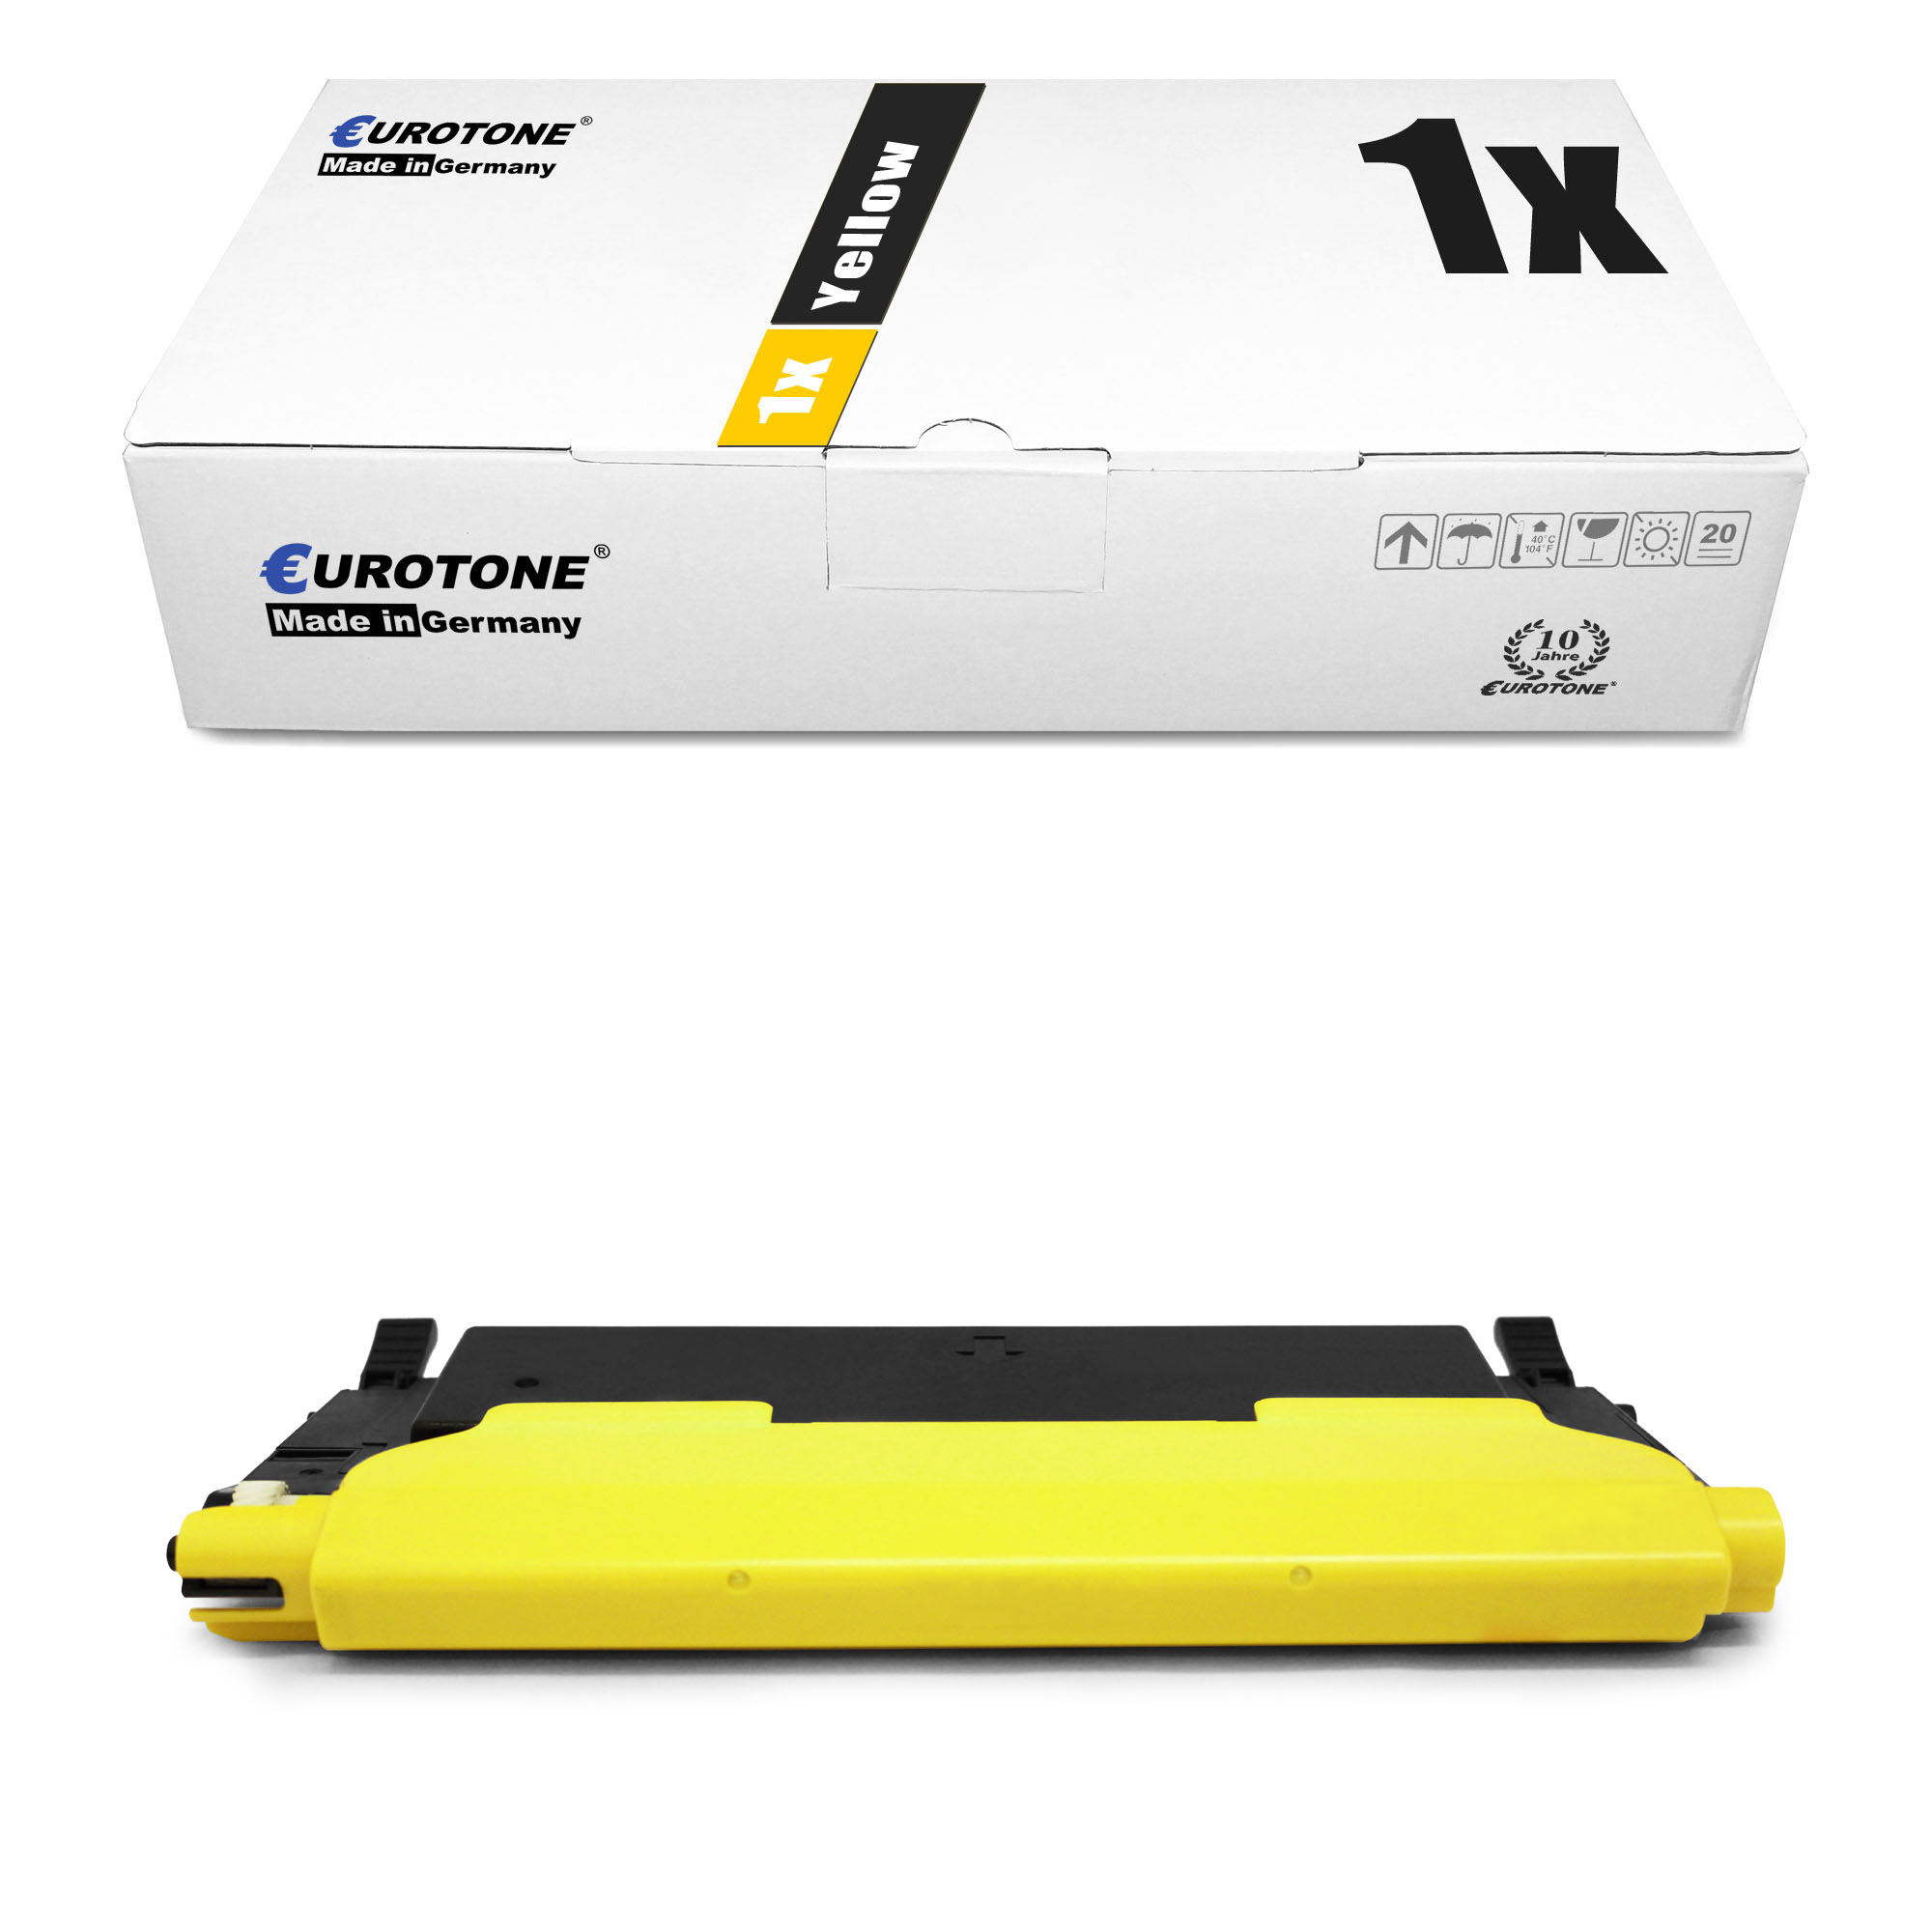 EUROTONE (HP Cartridge 150a W2073A 117A) 1xY Yellow Toner /